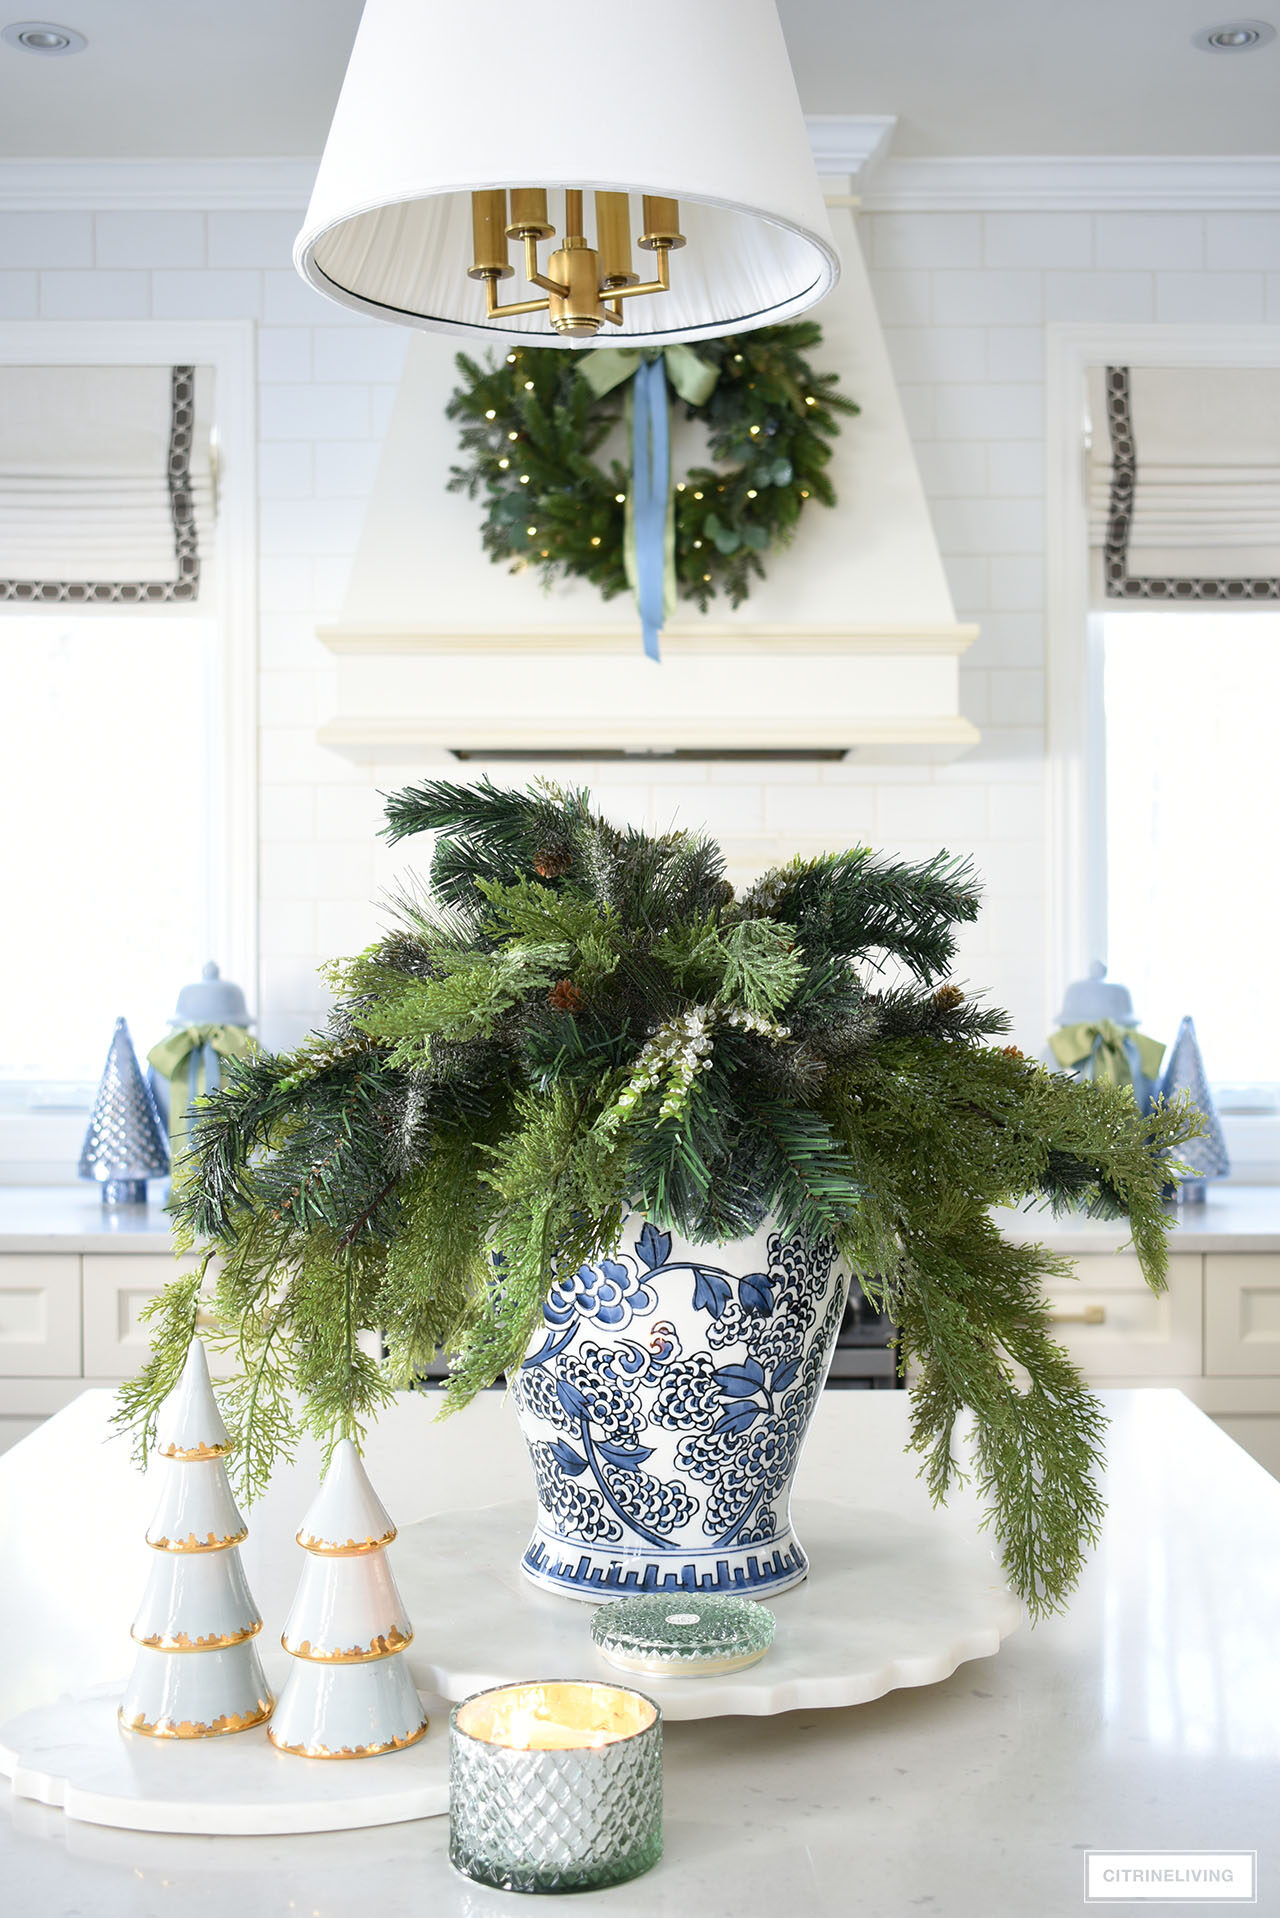 Christmas Kitchen Decor - It's a Blue, Blue Christmas!